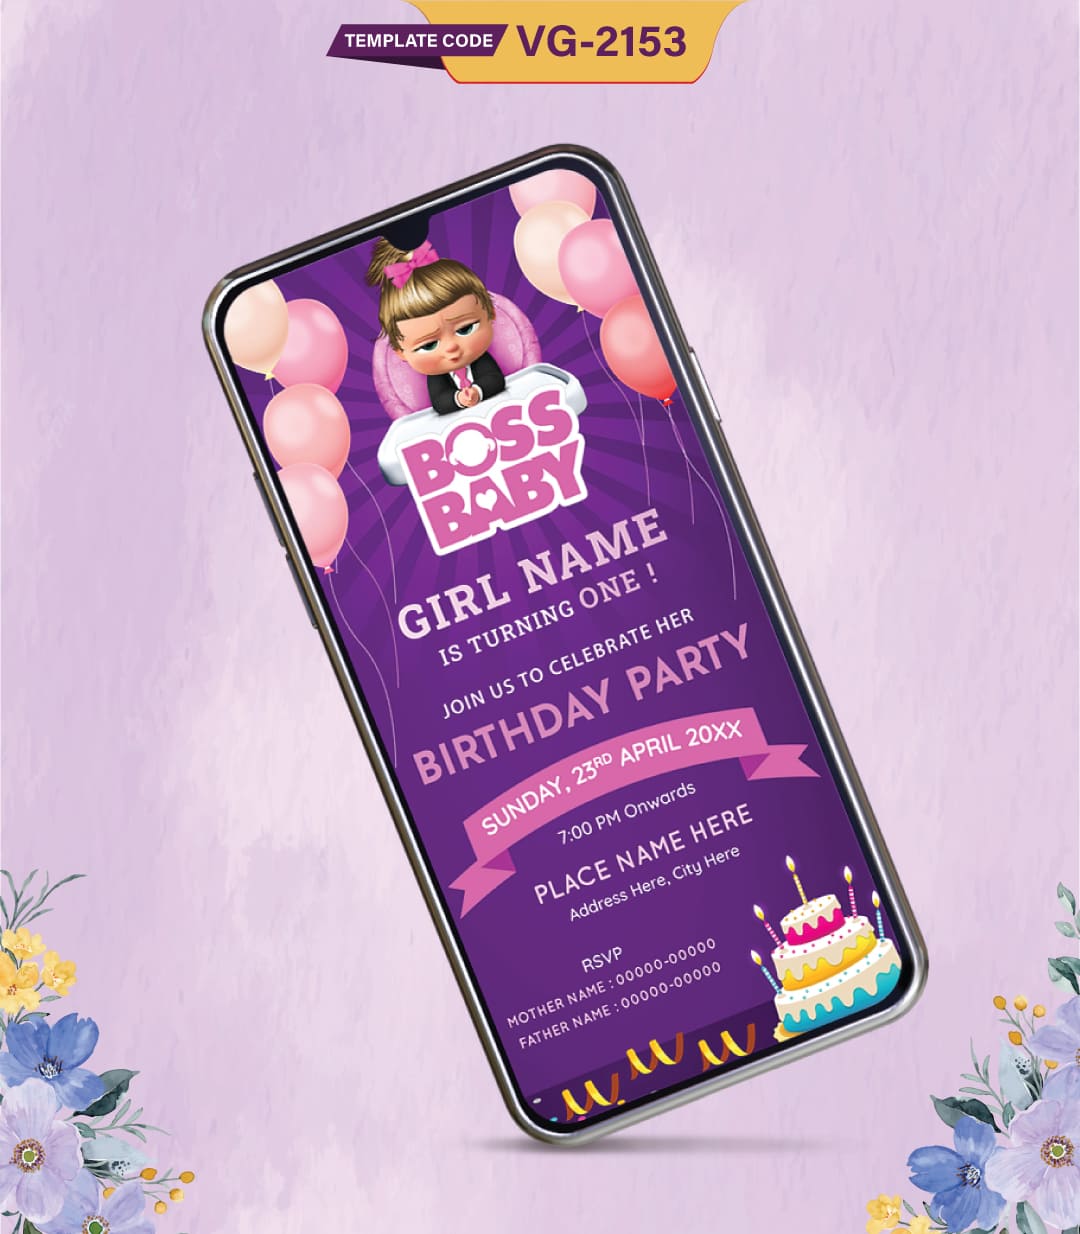 Boss Baby Girl Birthday Invitation Card